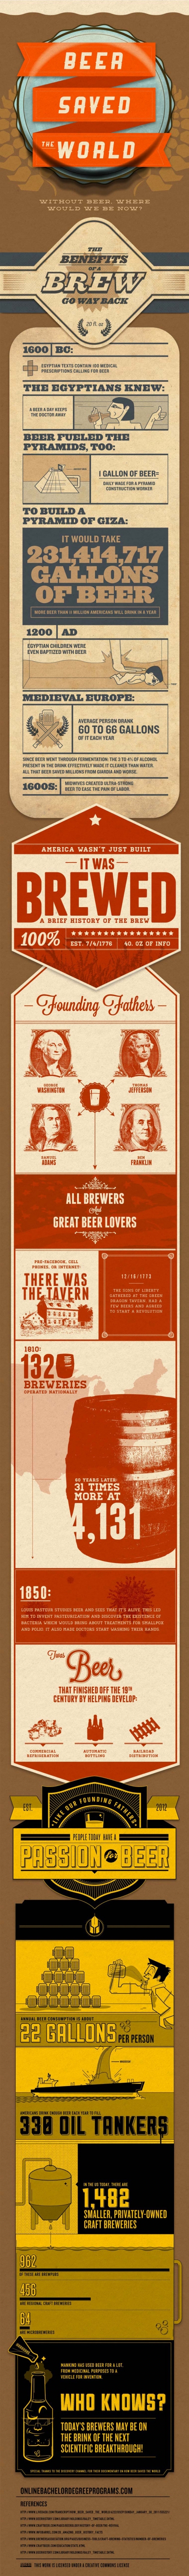 Beer history